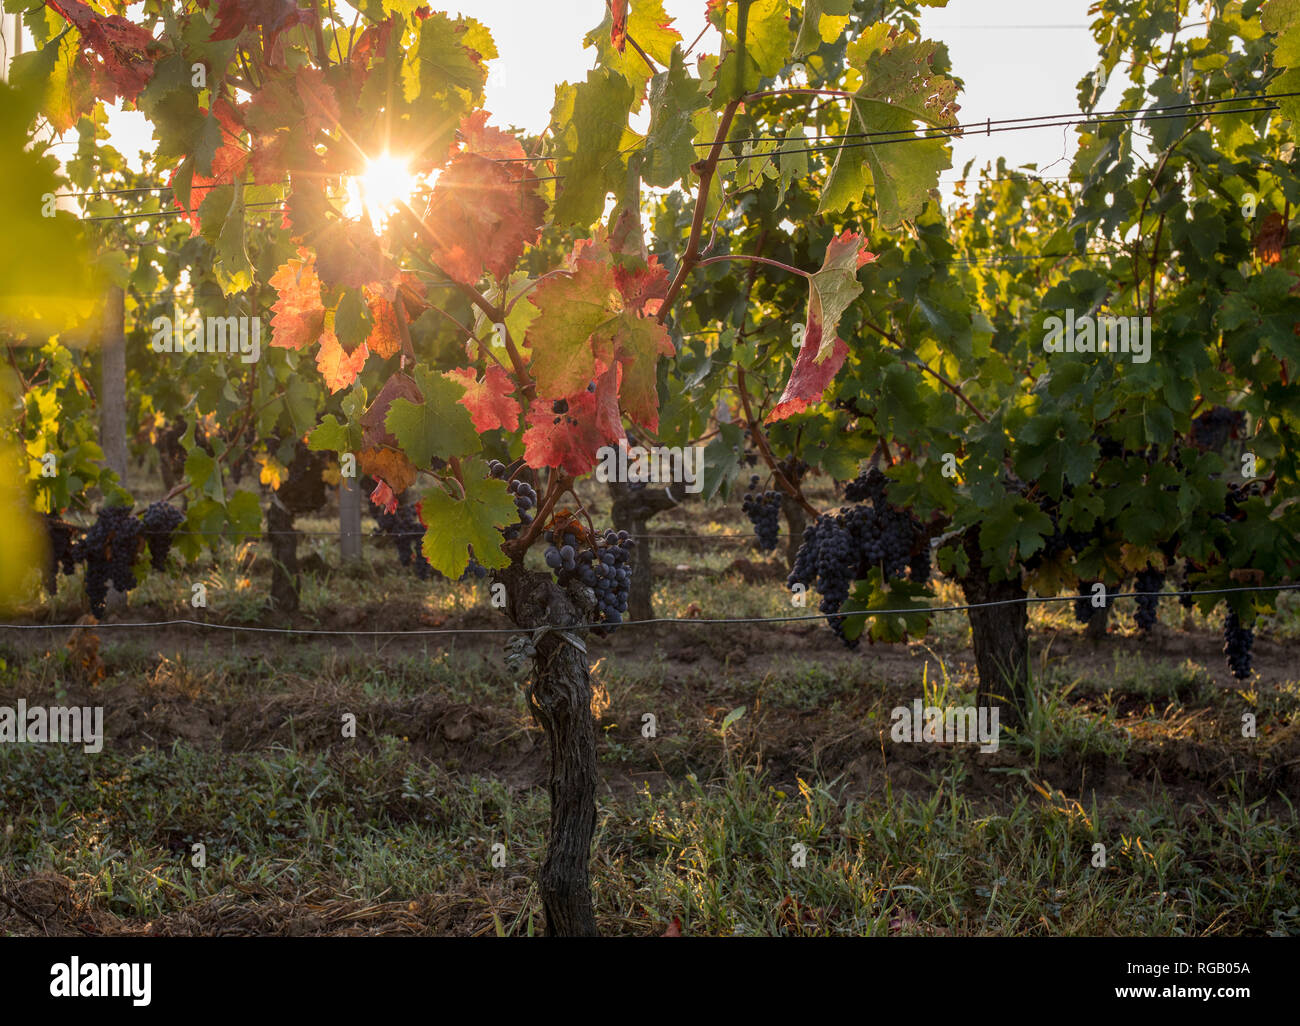 Morning light in the vineyards of Saint Georges de Montagne near Saint Emilion, Gironde, France Stock Photo